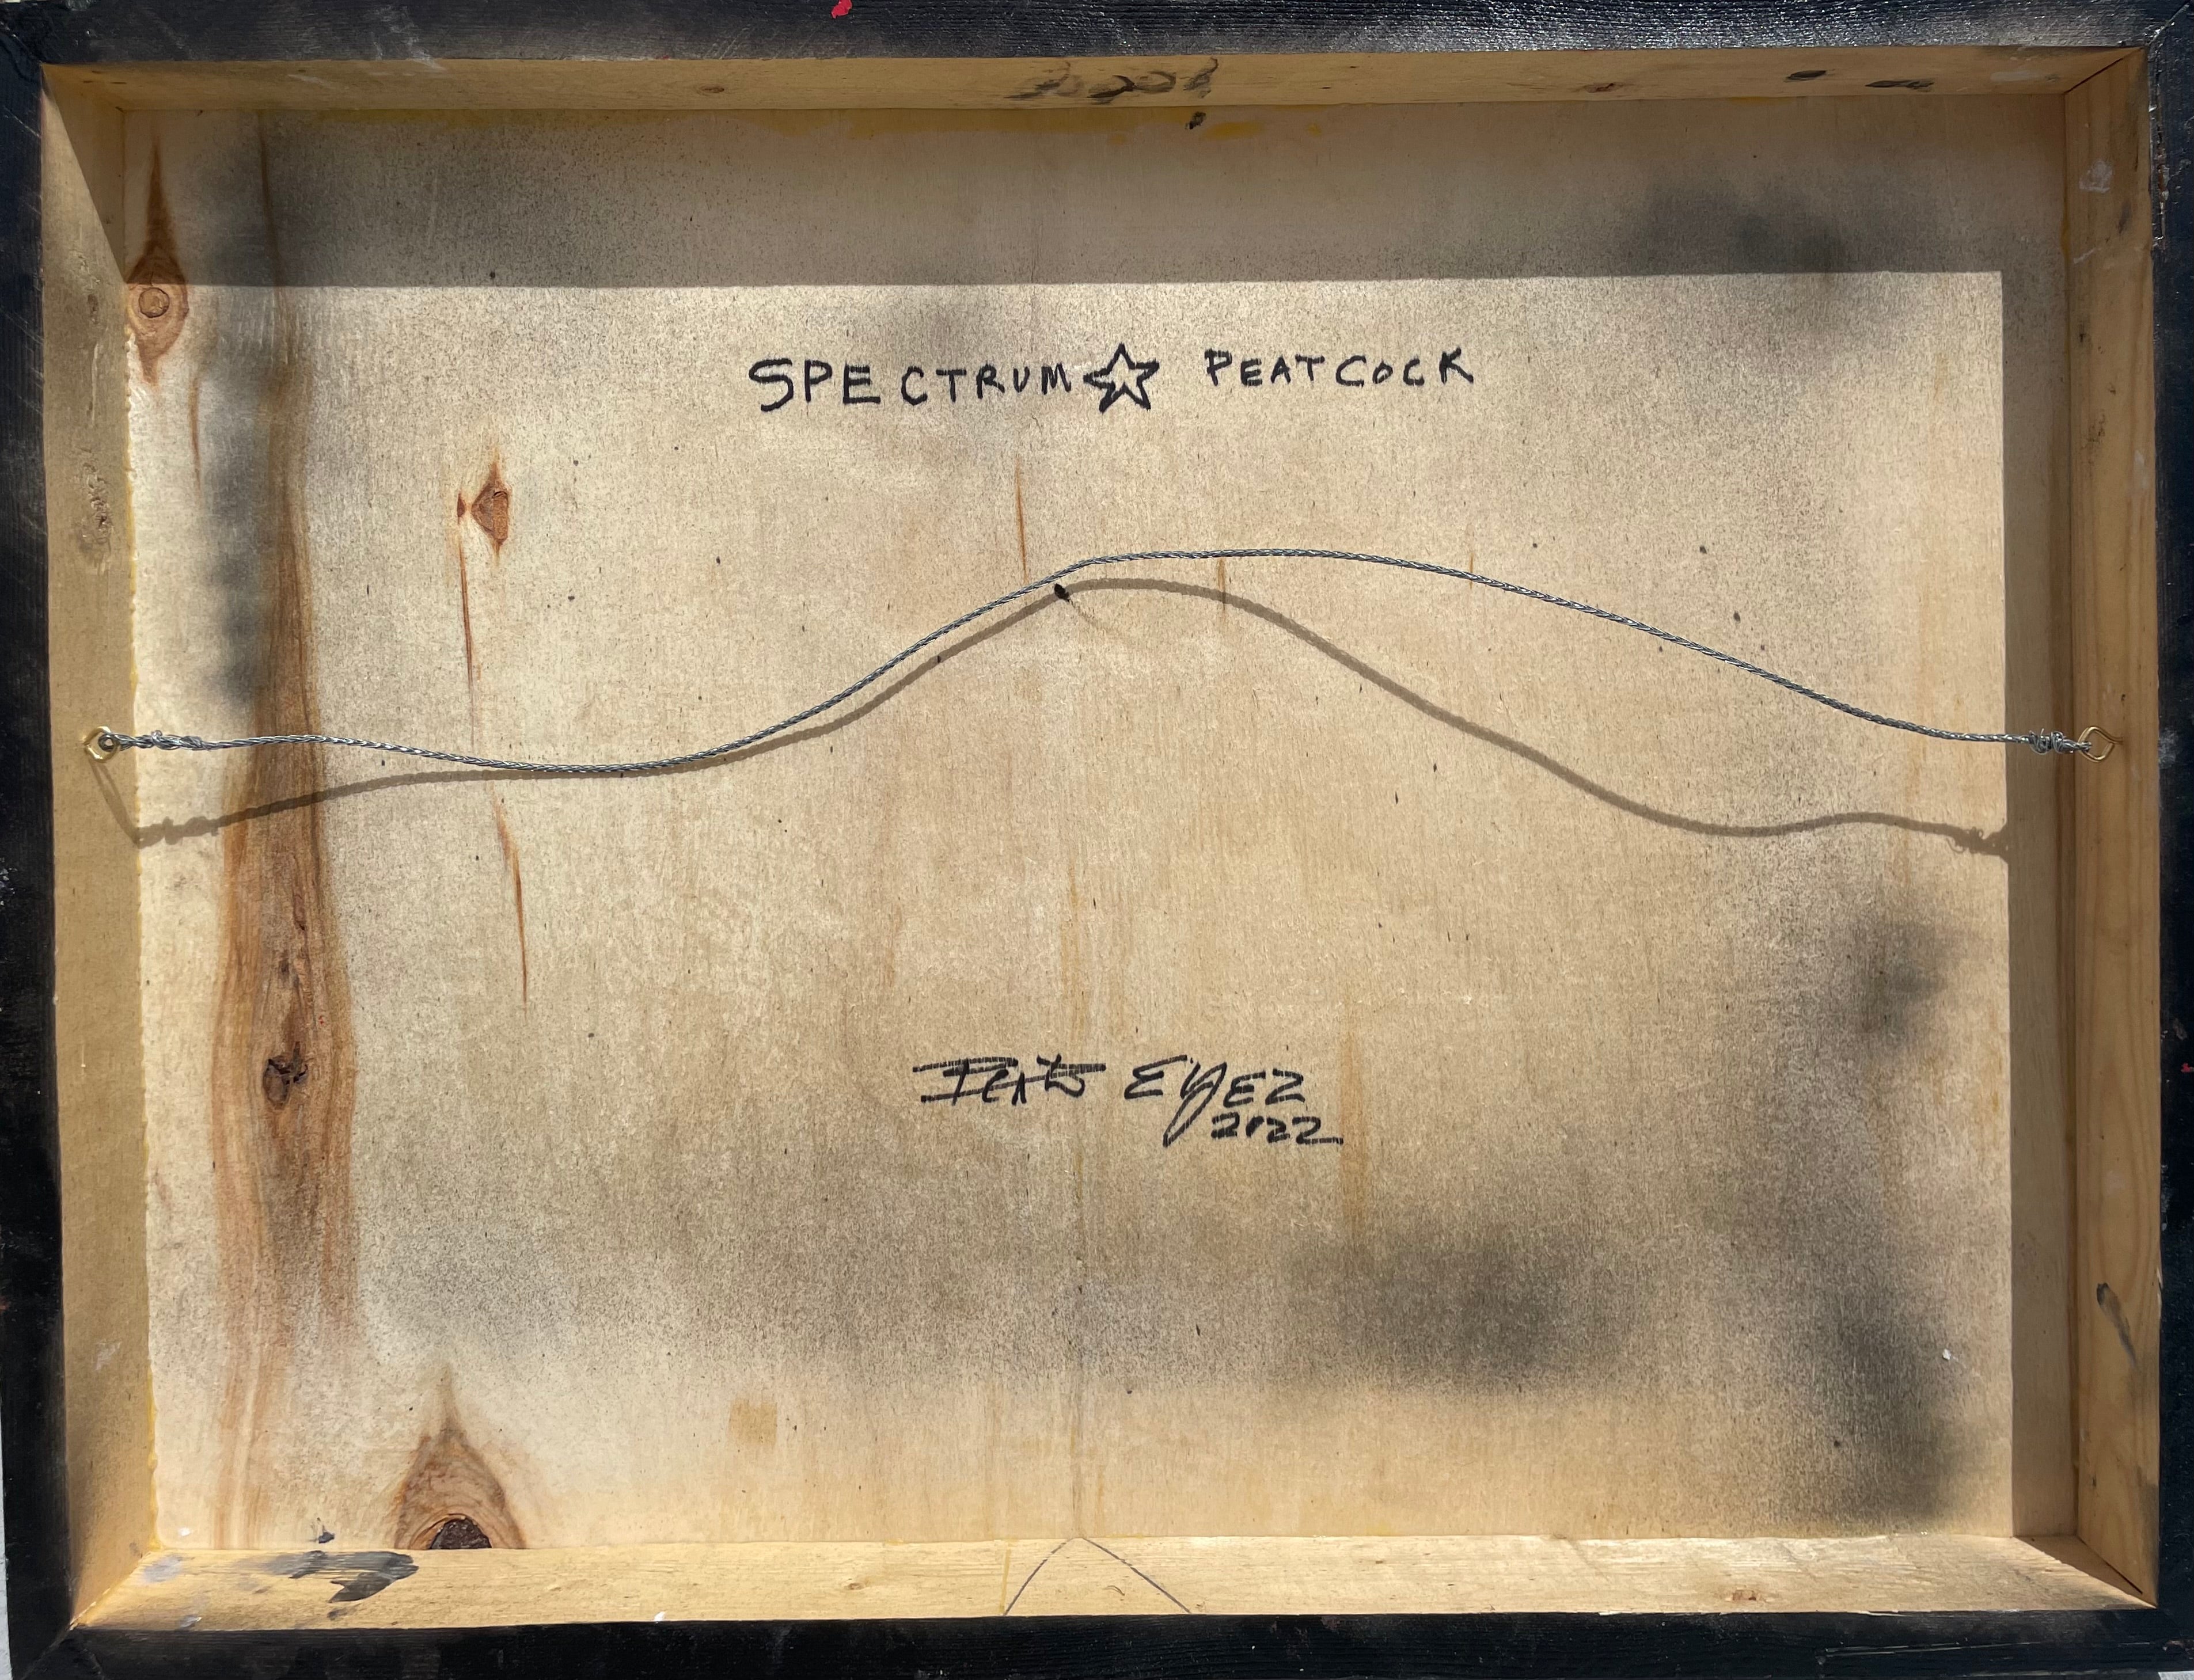 Spectrum Peatcock